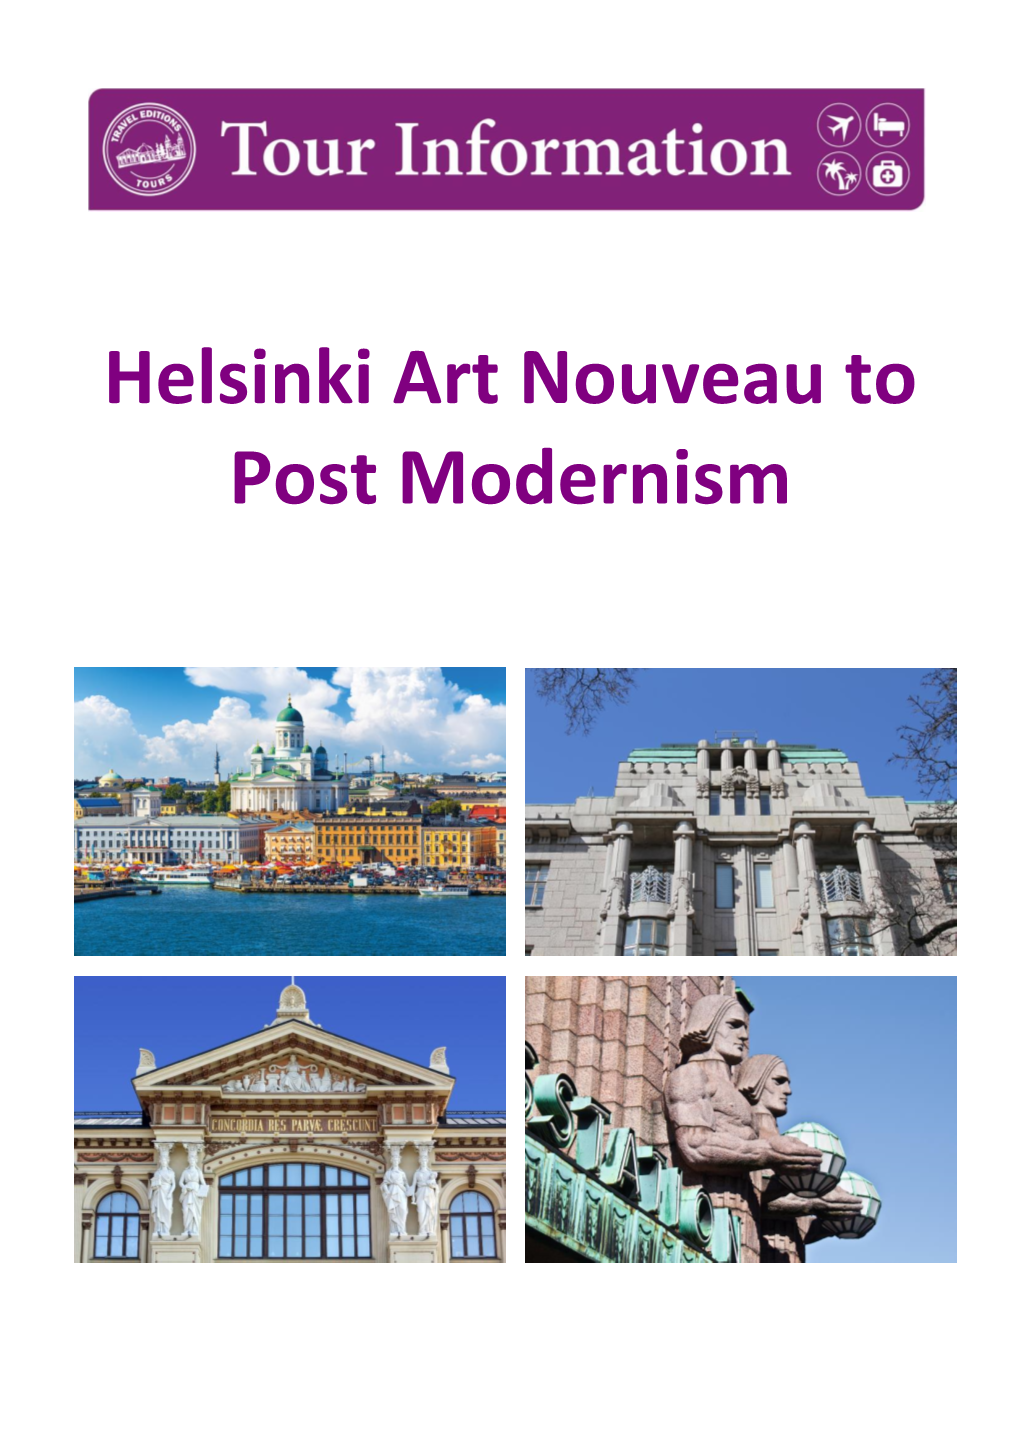 Helsinki Art Nouveau to Post Modernism